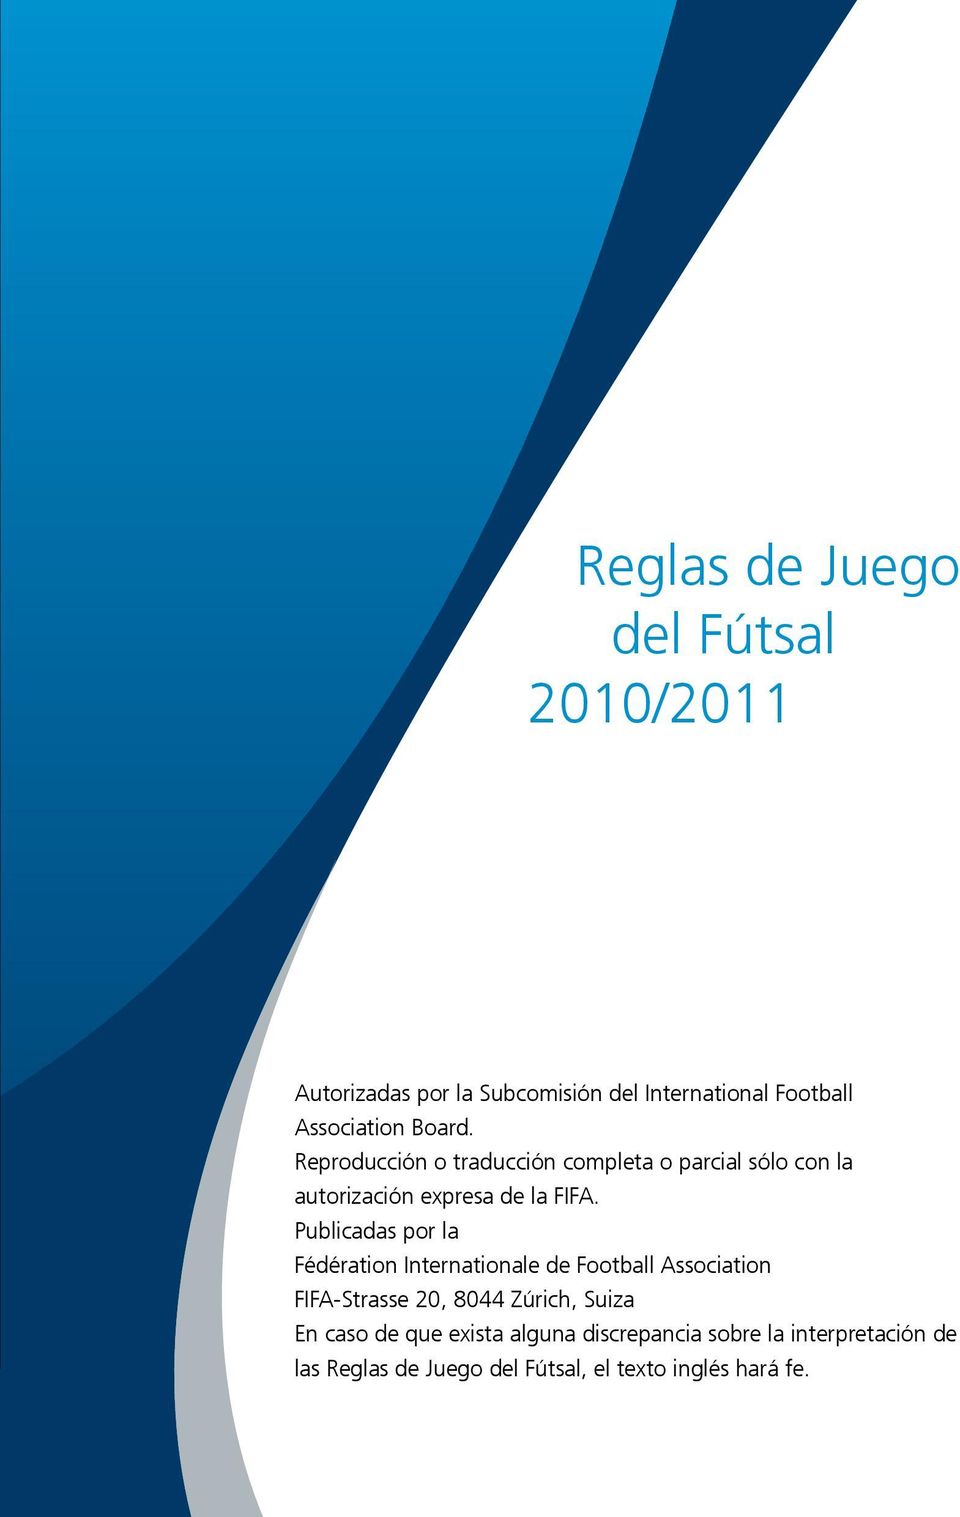 Publicadas por la Fédération Internationale de Football Association FIFA-Strasse 20, 8044 Zúrich, Suiza En